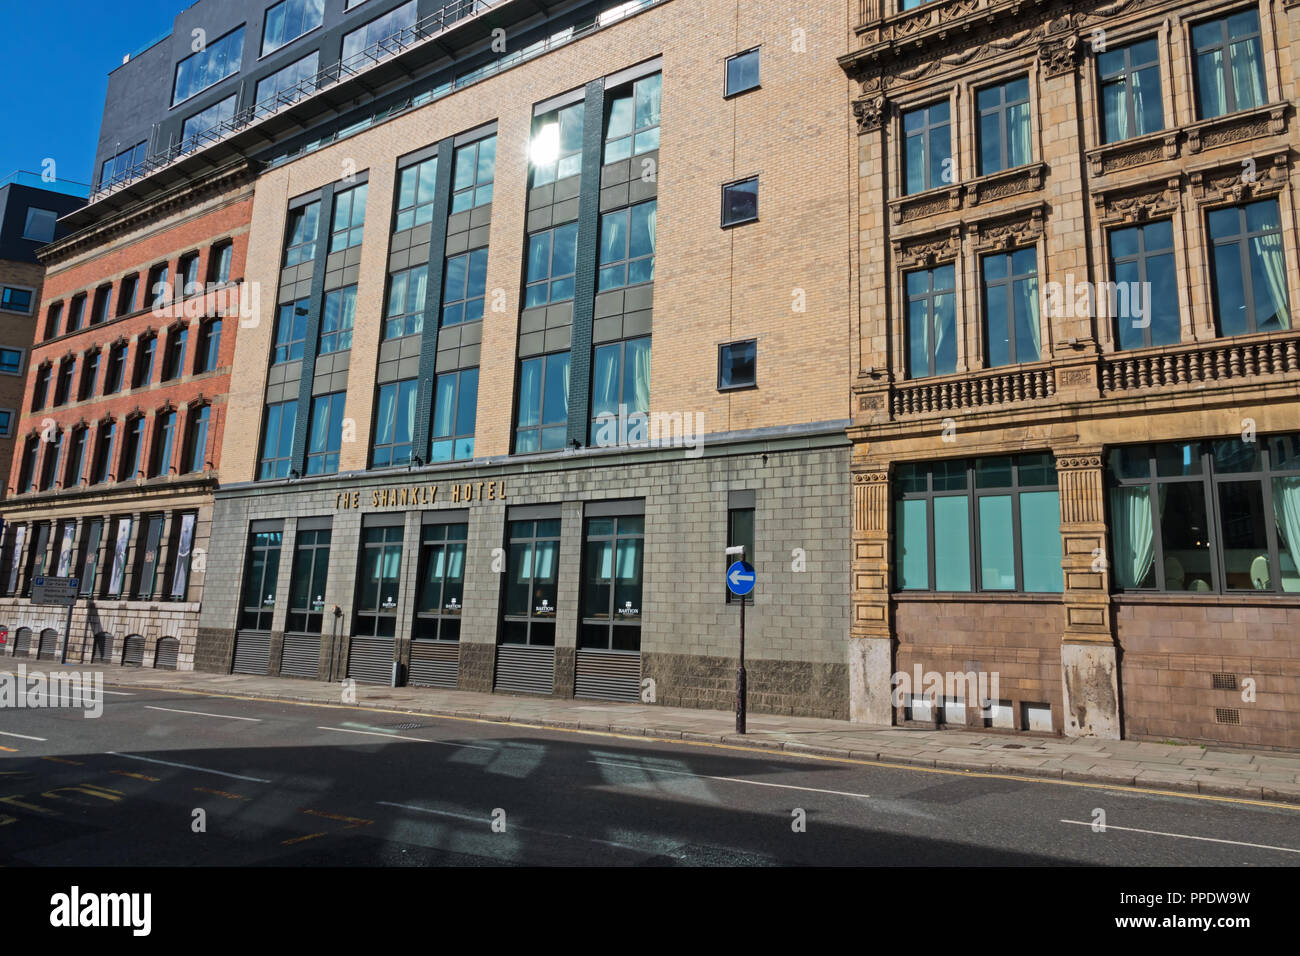 Fassade des Shankly Hotel, ein luxuriöses Bill Shankly Themenhotel in Whitechapel Liverpool UK Stockfoto